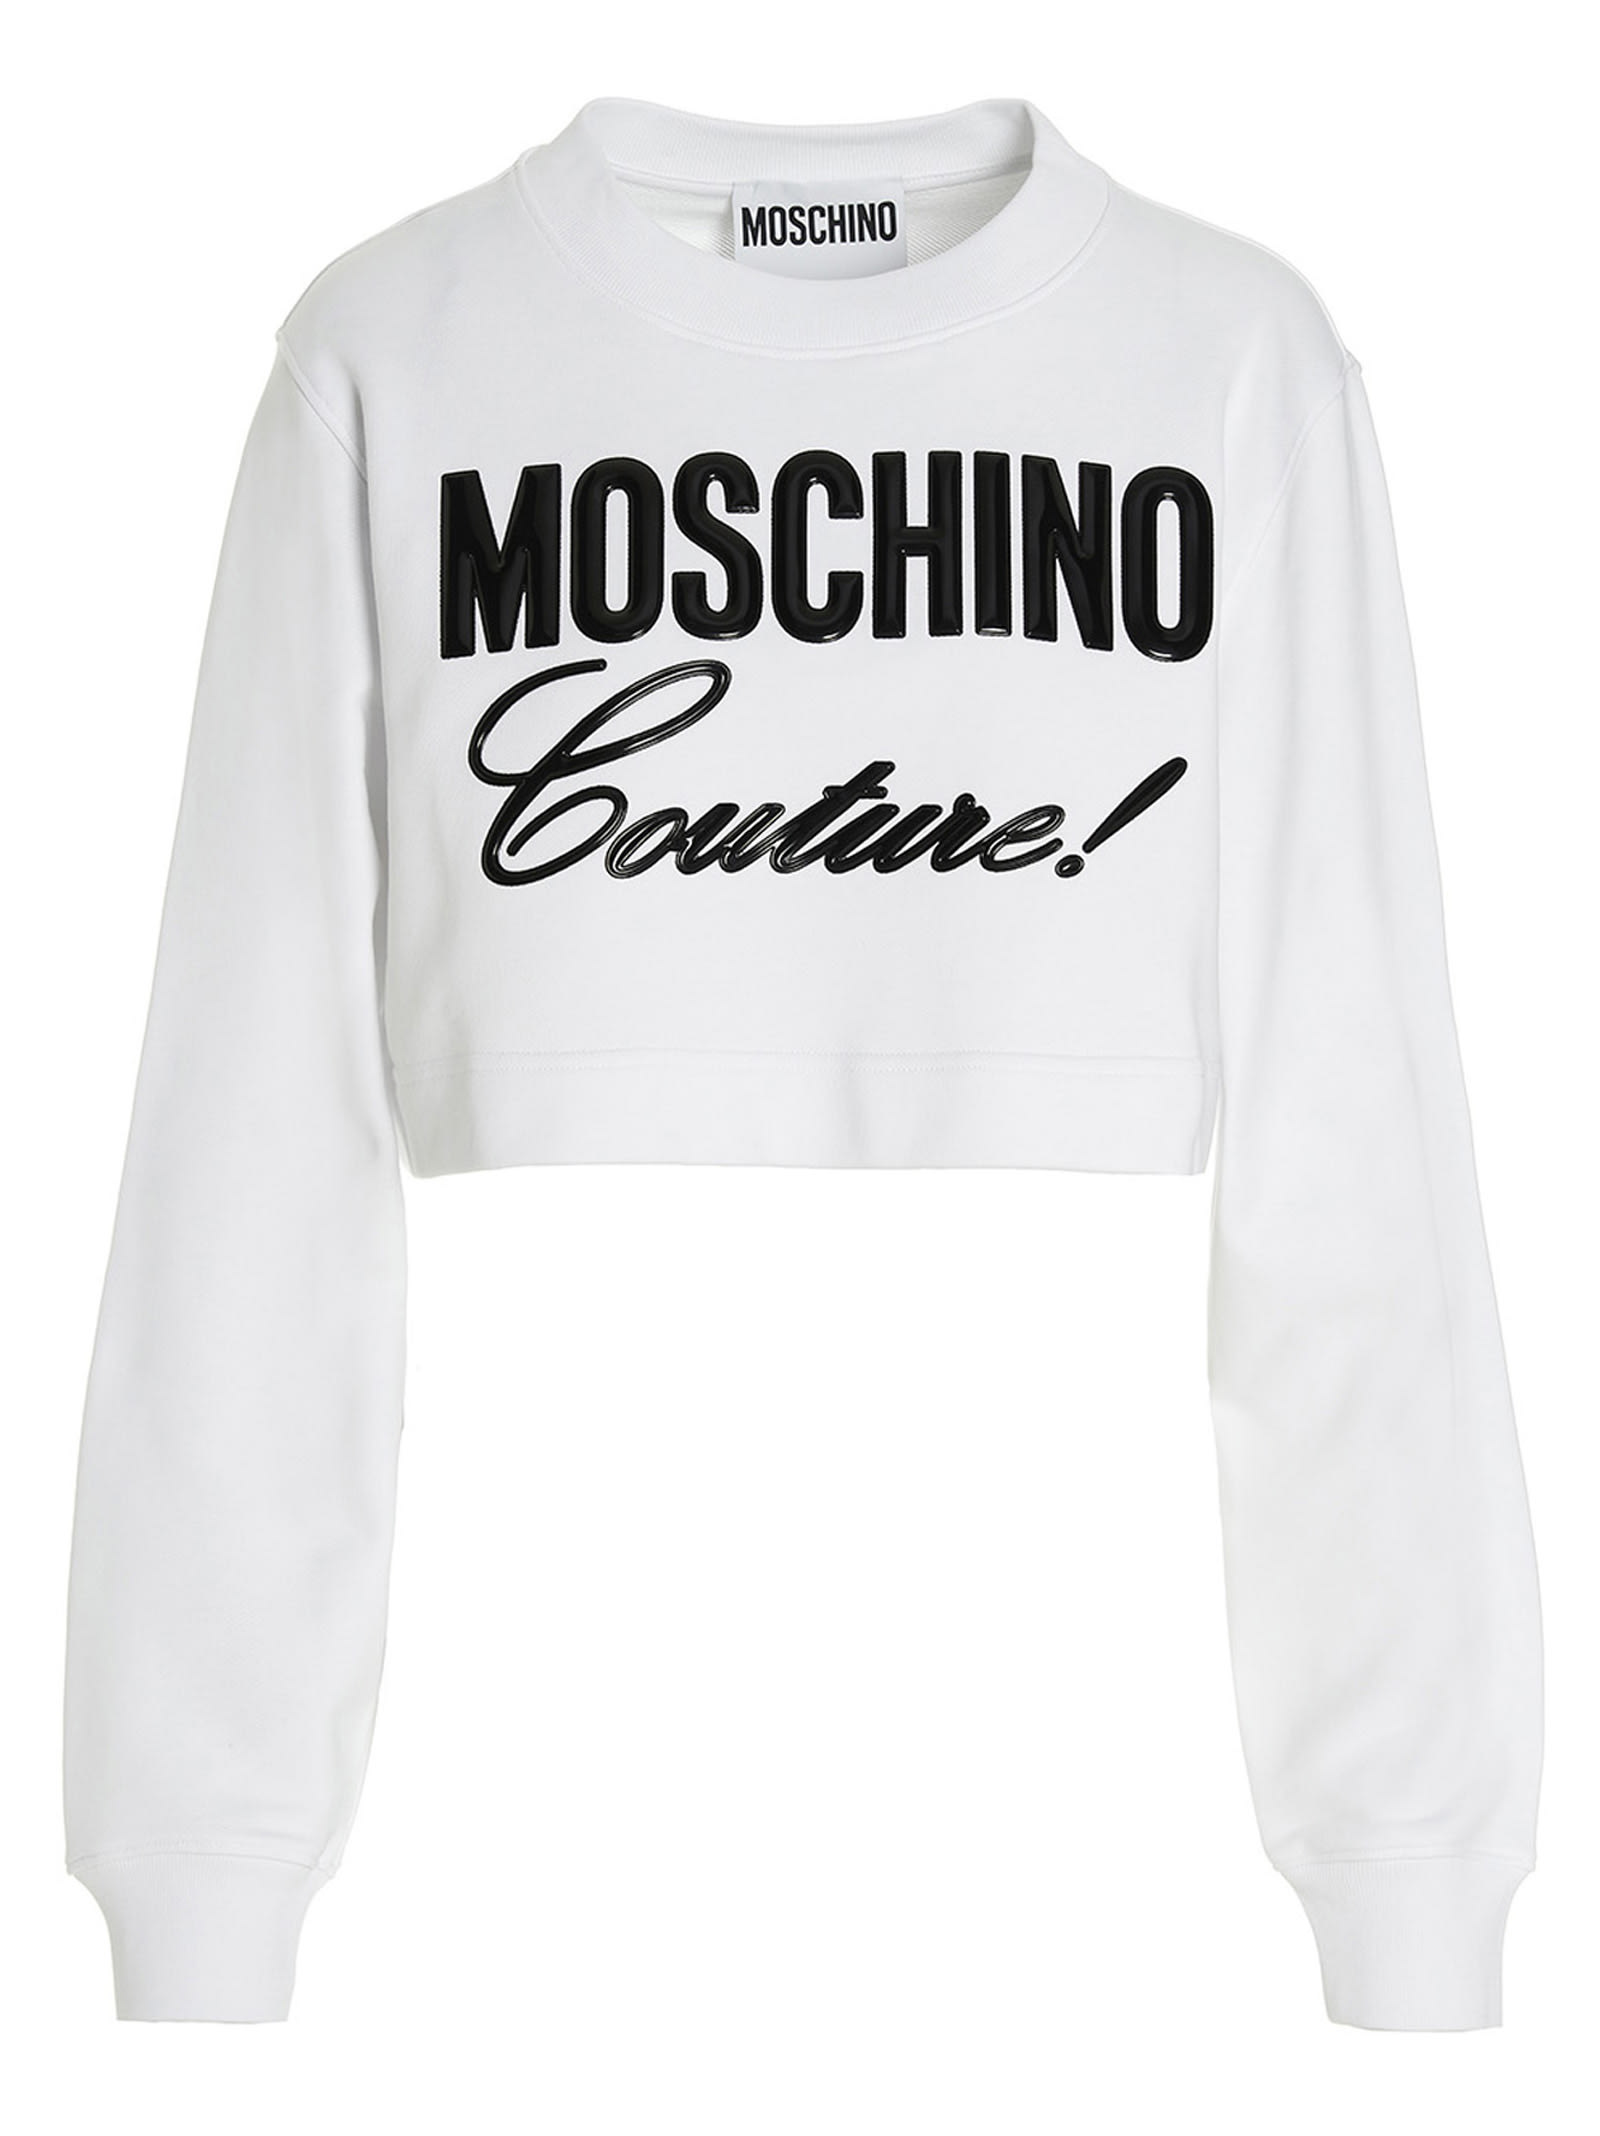 Moschino Couture Sweatshirt